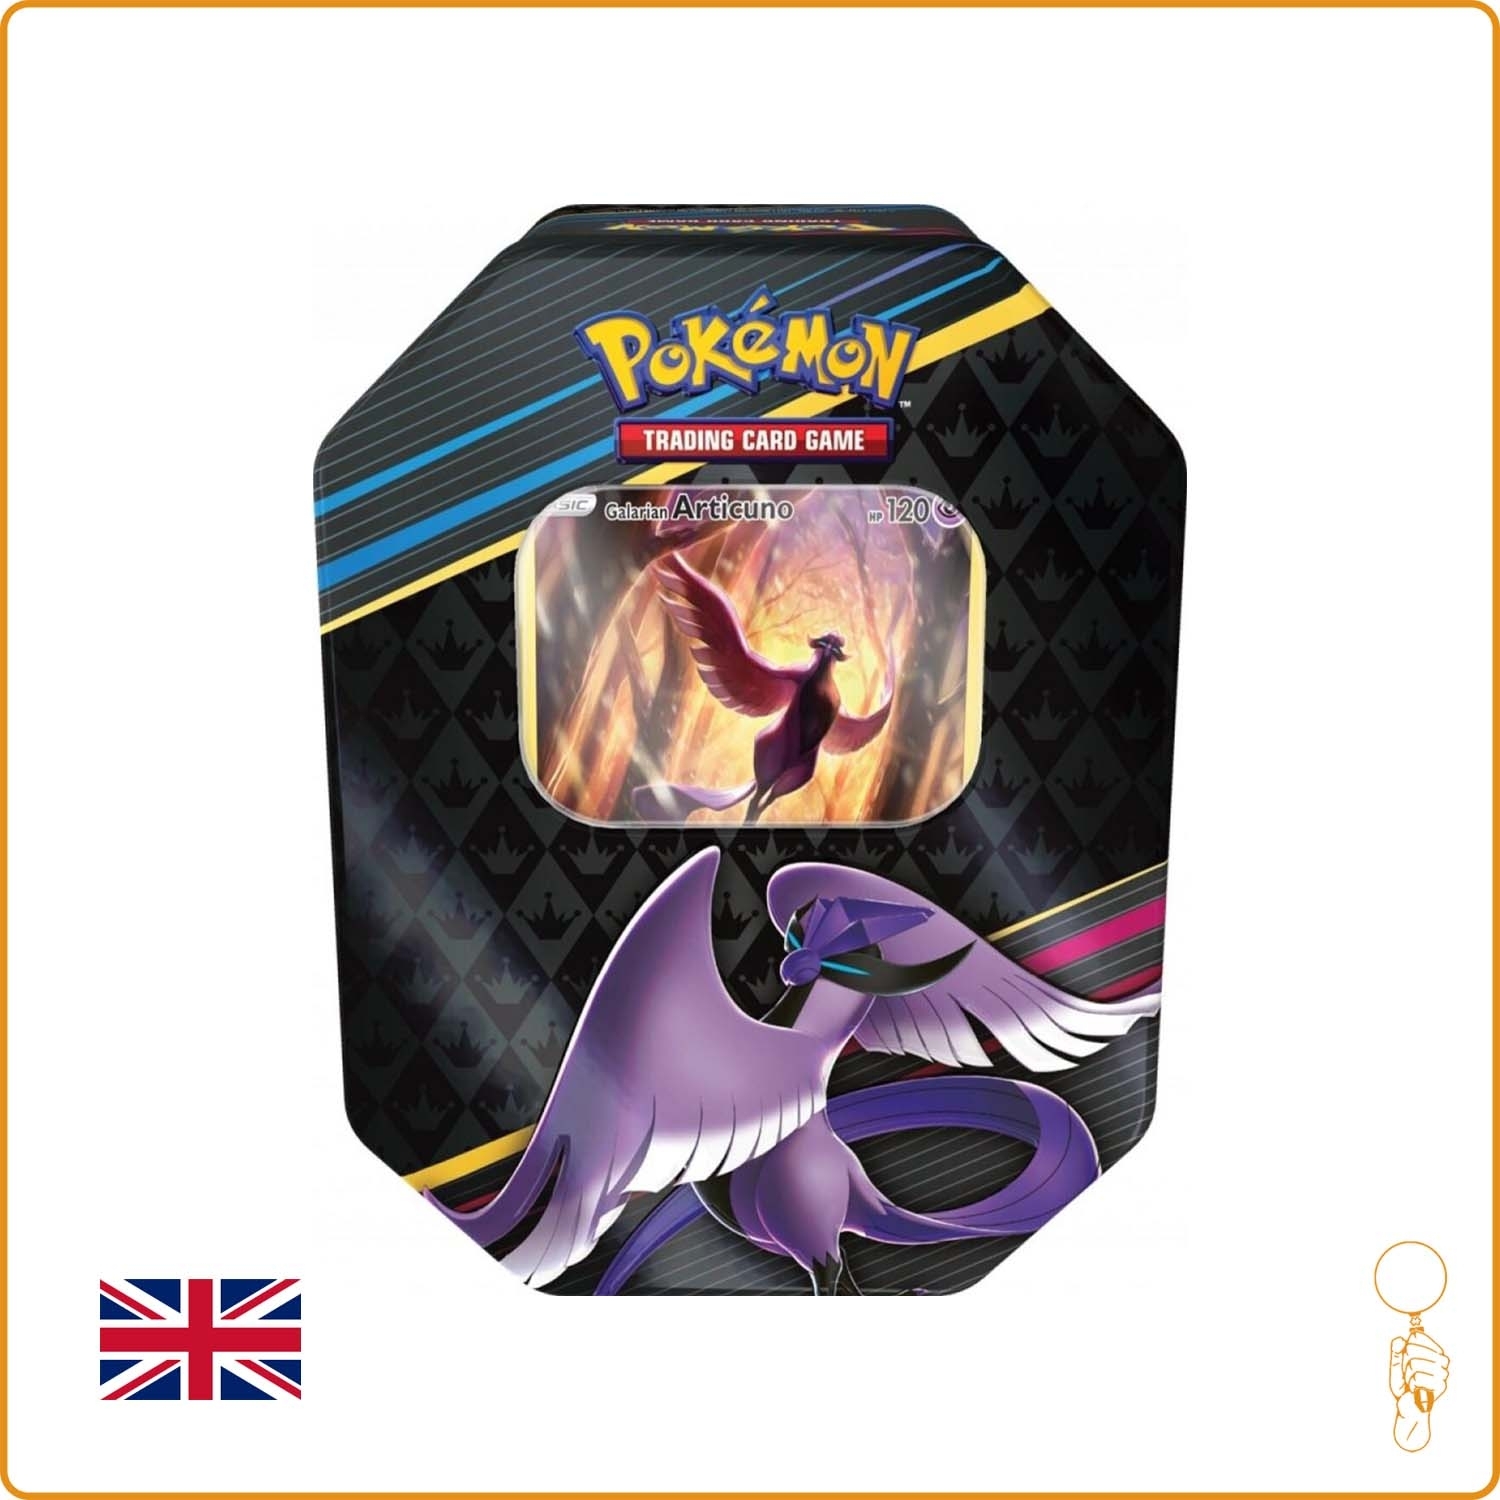 Pokébox - Pokemon - Zénith Suprême - EB12.5 - Artikodin de Galar - Scellé - Anglais The Pokémon Company - 1